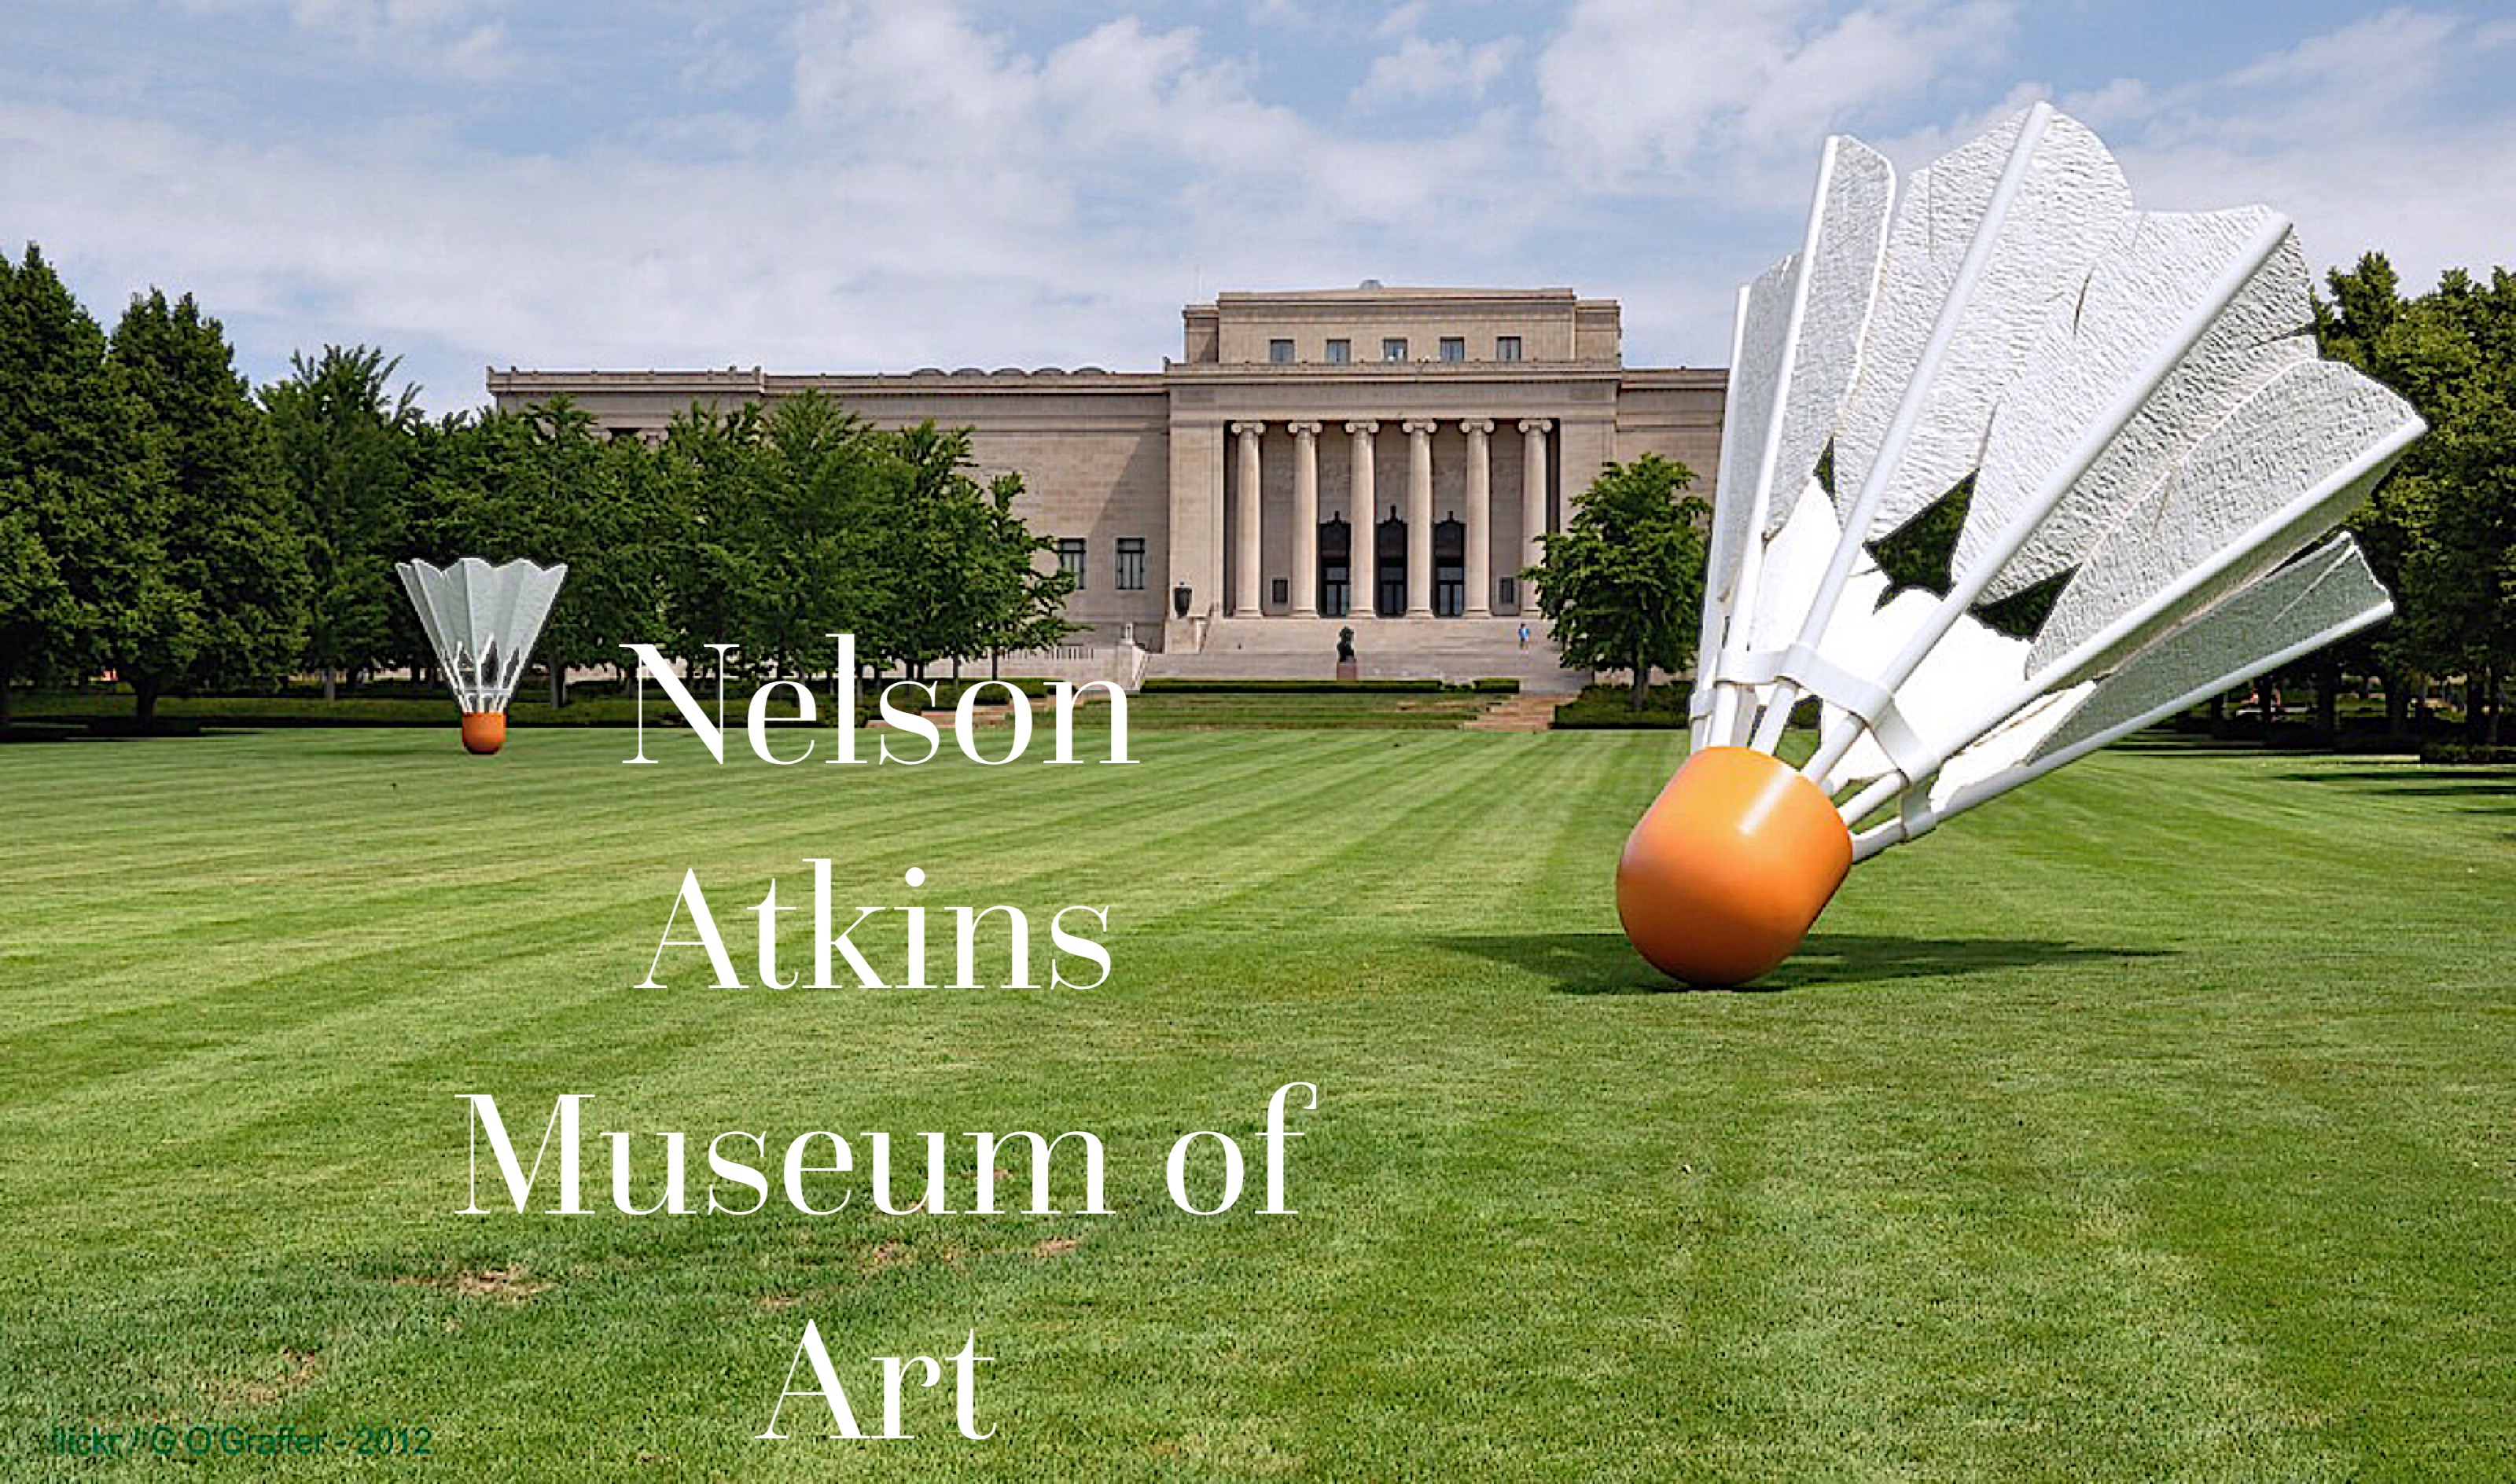 Nelson Atkins Museum of Art